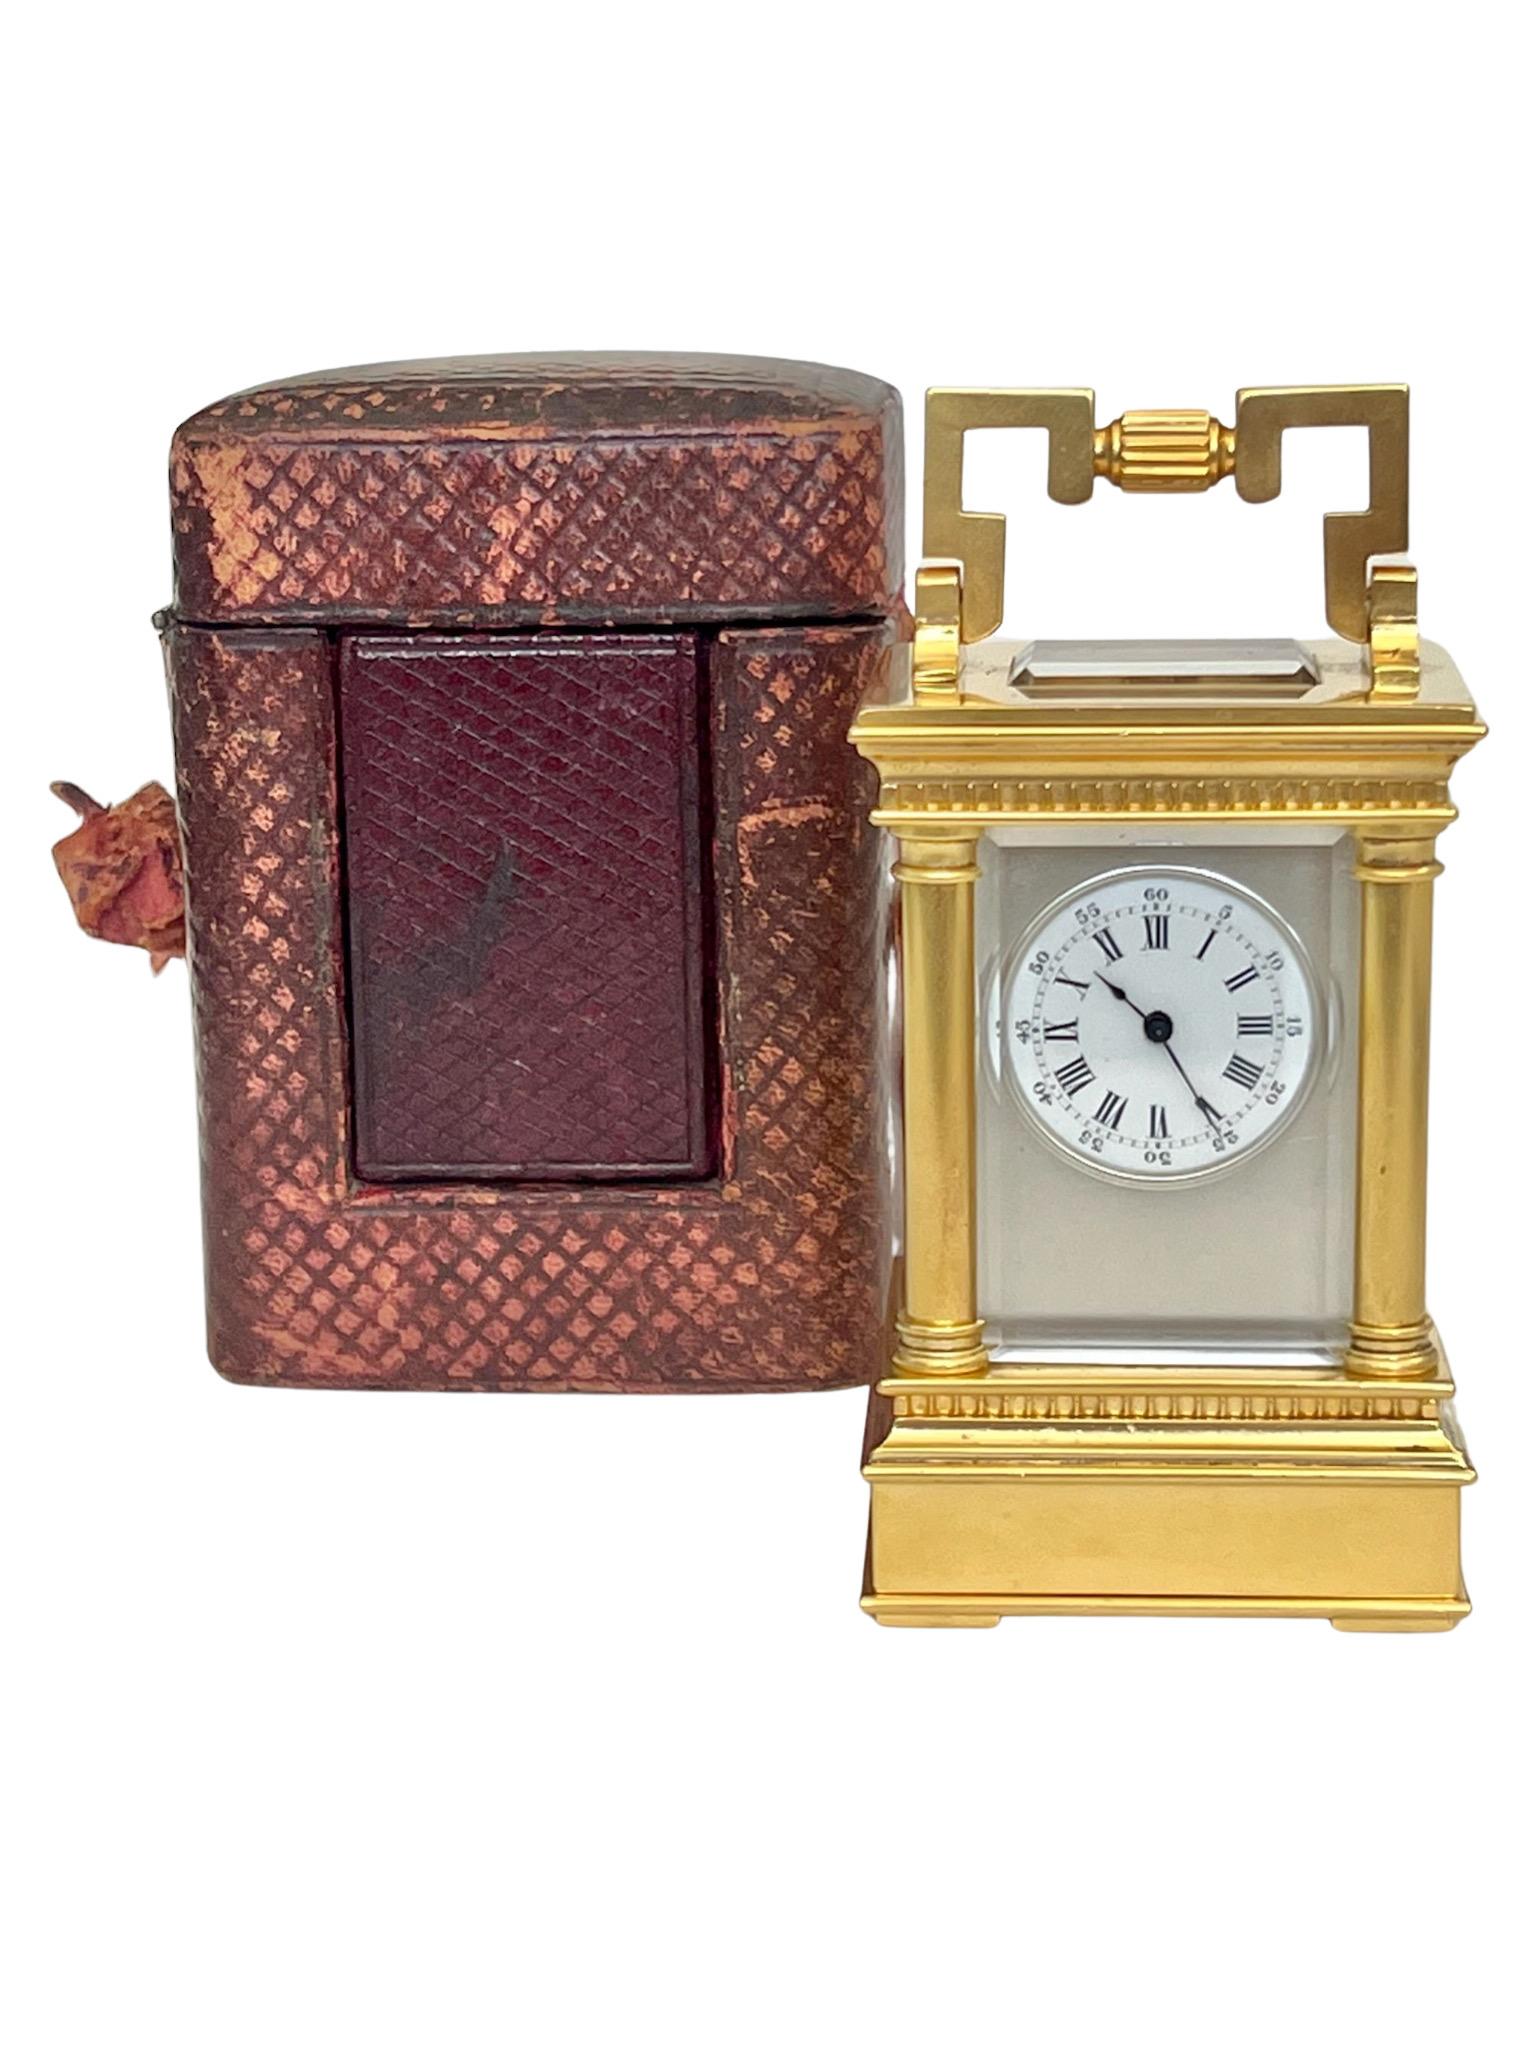 Antique French Miniature Gilt Timepiece Carriage Clock with Original Travel Case For Sale 10